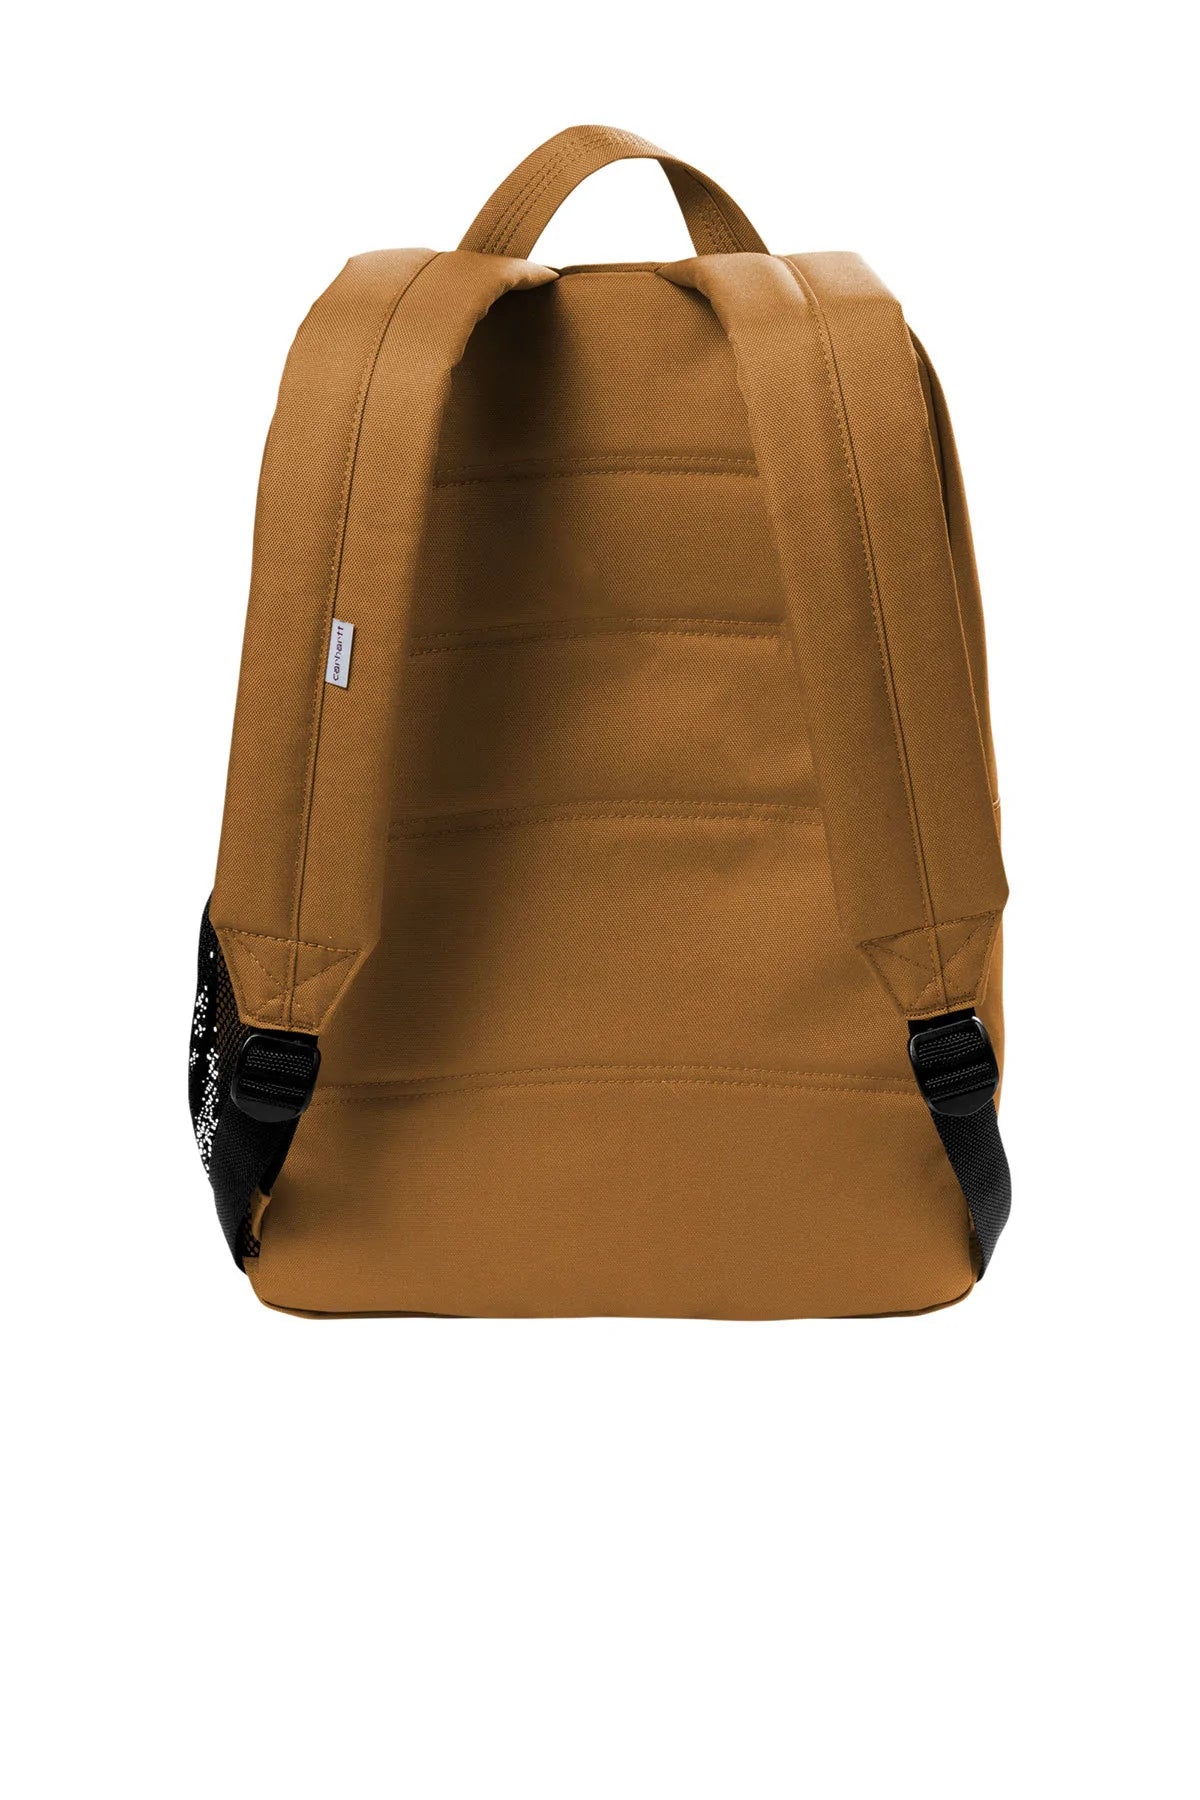 Carhartt Canvas Branded Backpacks,, Carhartt Brown